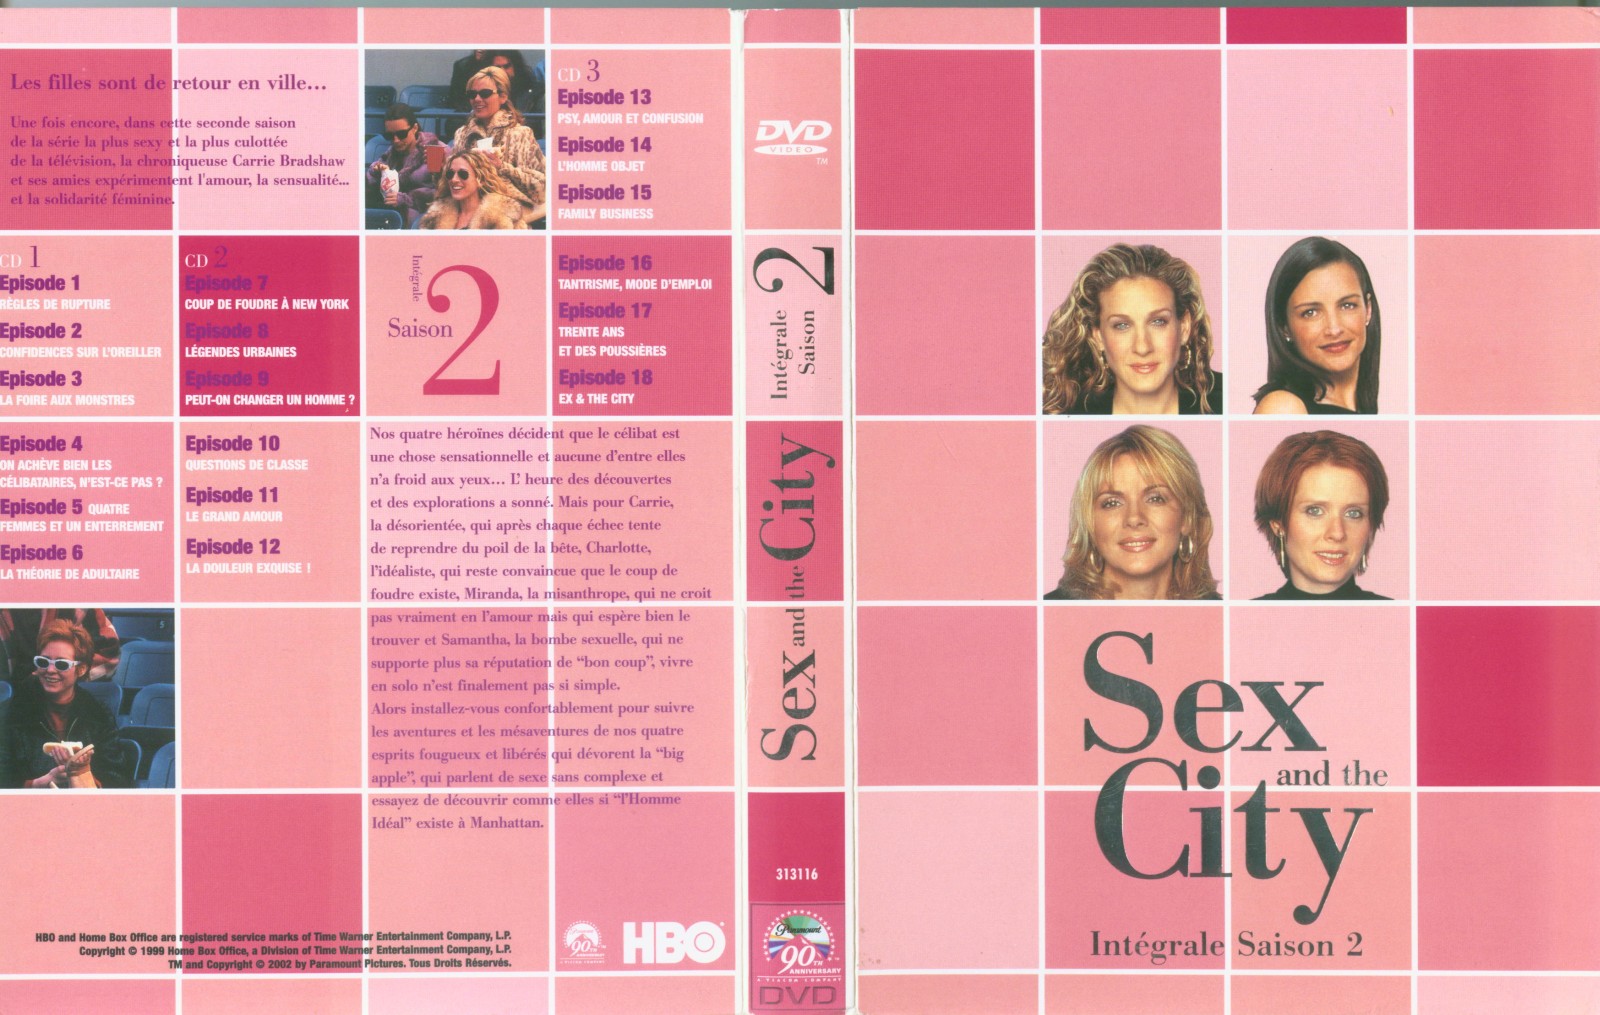 Jaquette DVD Sex and the city Saison 2